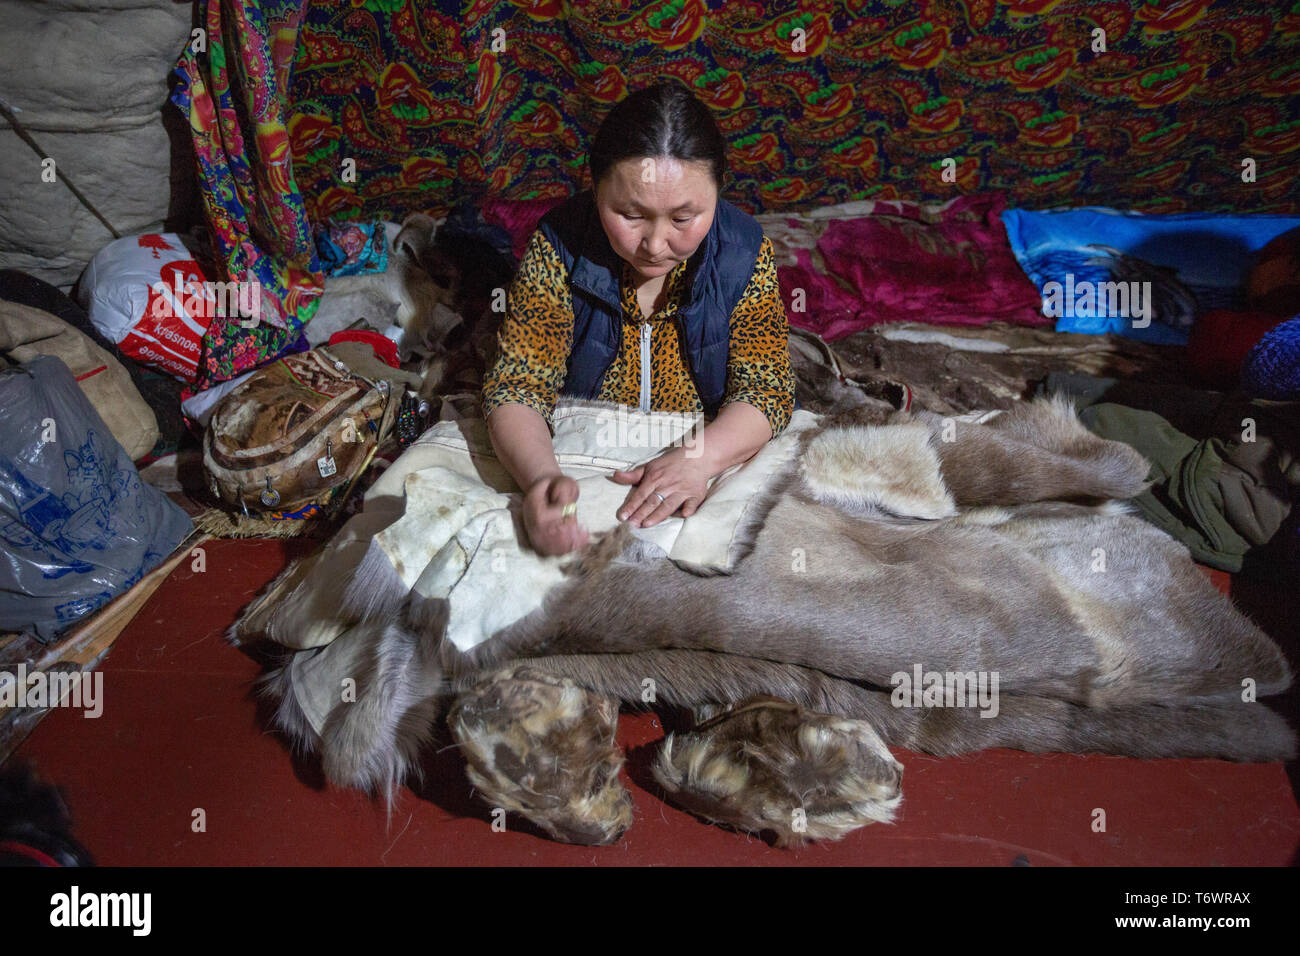 Russia, Yamal-Nenets Autonomous Region, Yamal peninsula. Nomadic Nenets reindeer herders at camp.  Woman inside typical tent aka chum sewing. Stock Photo